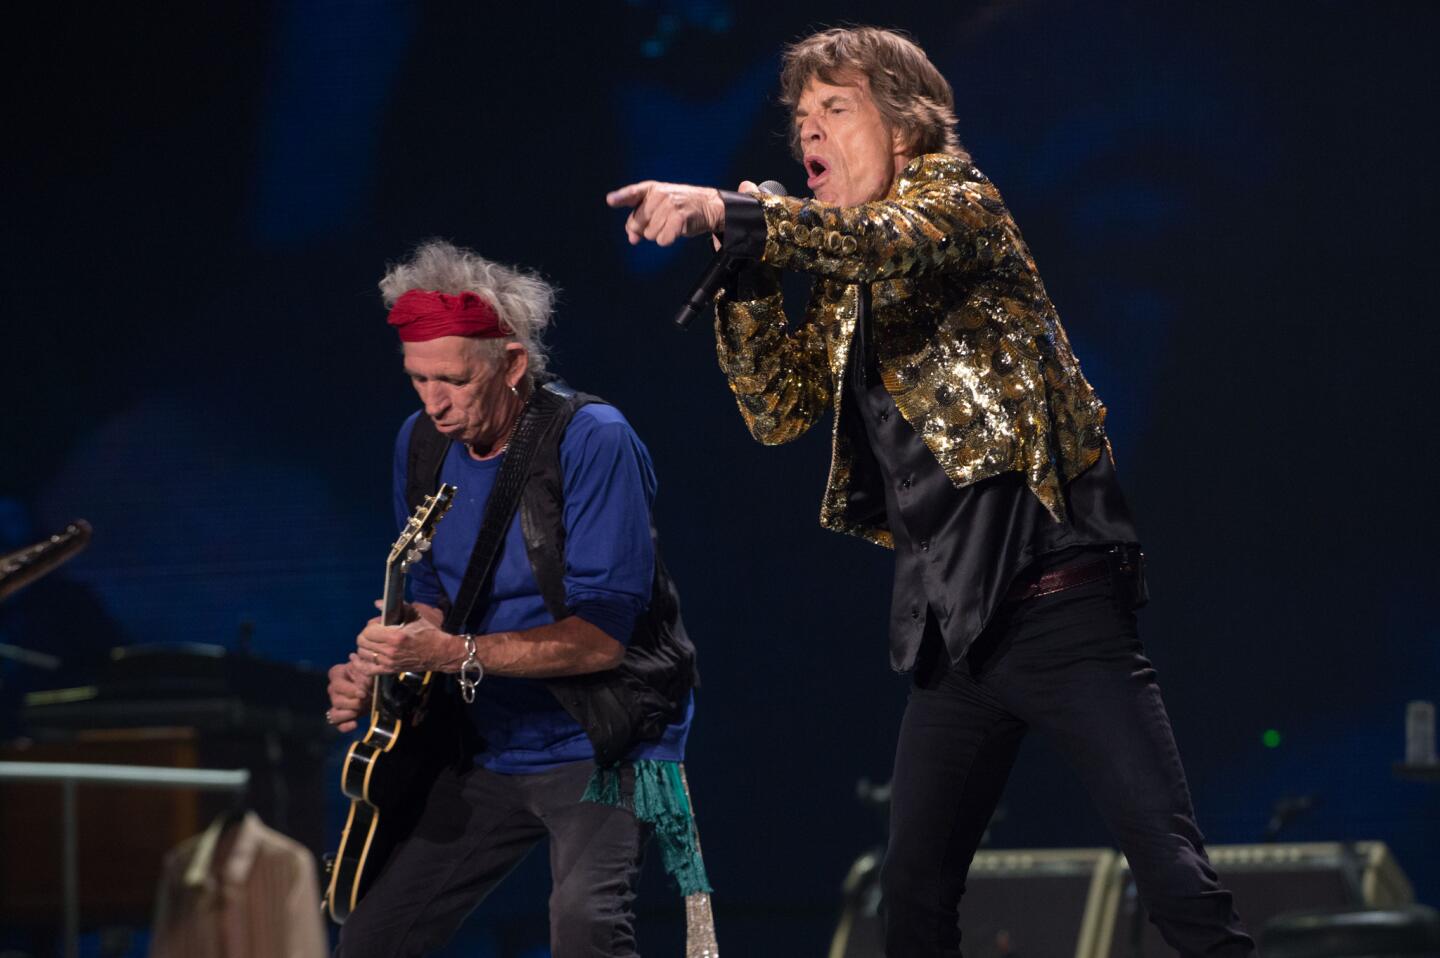 Keith Richards, Mick Jagger